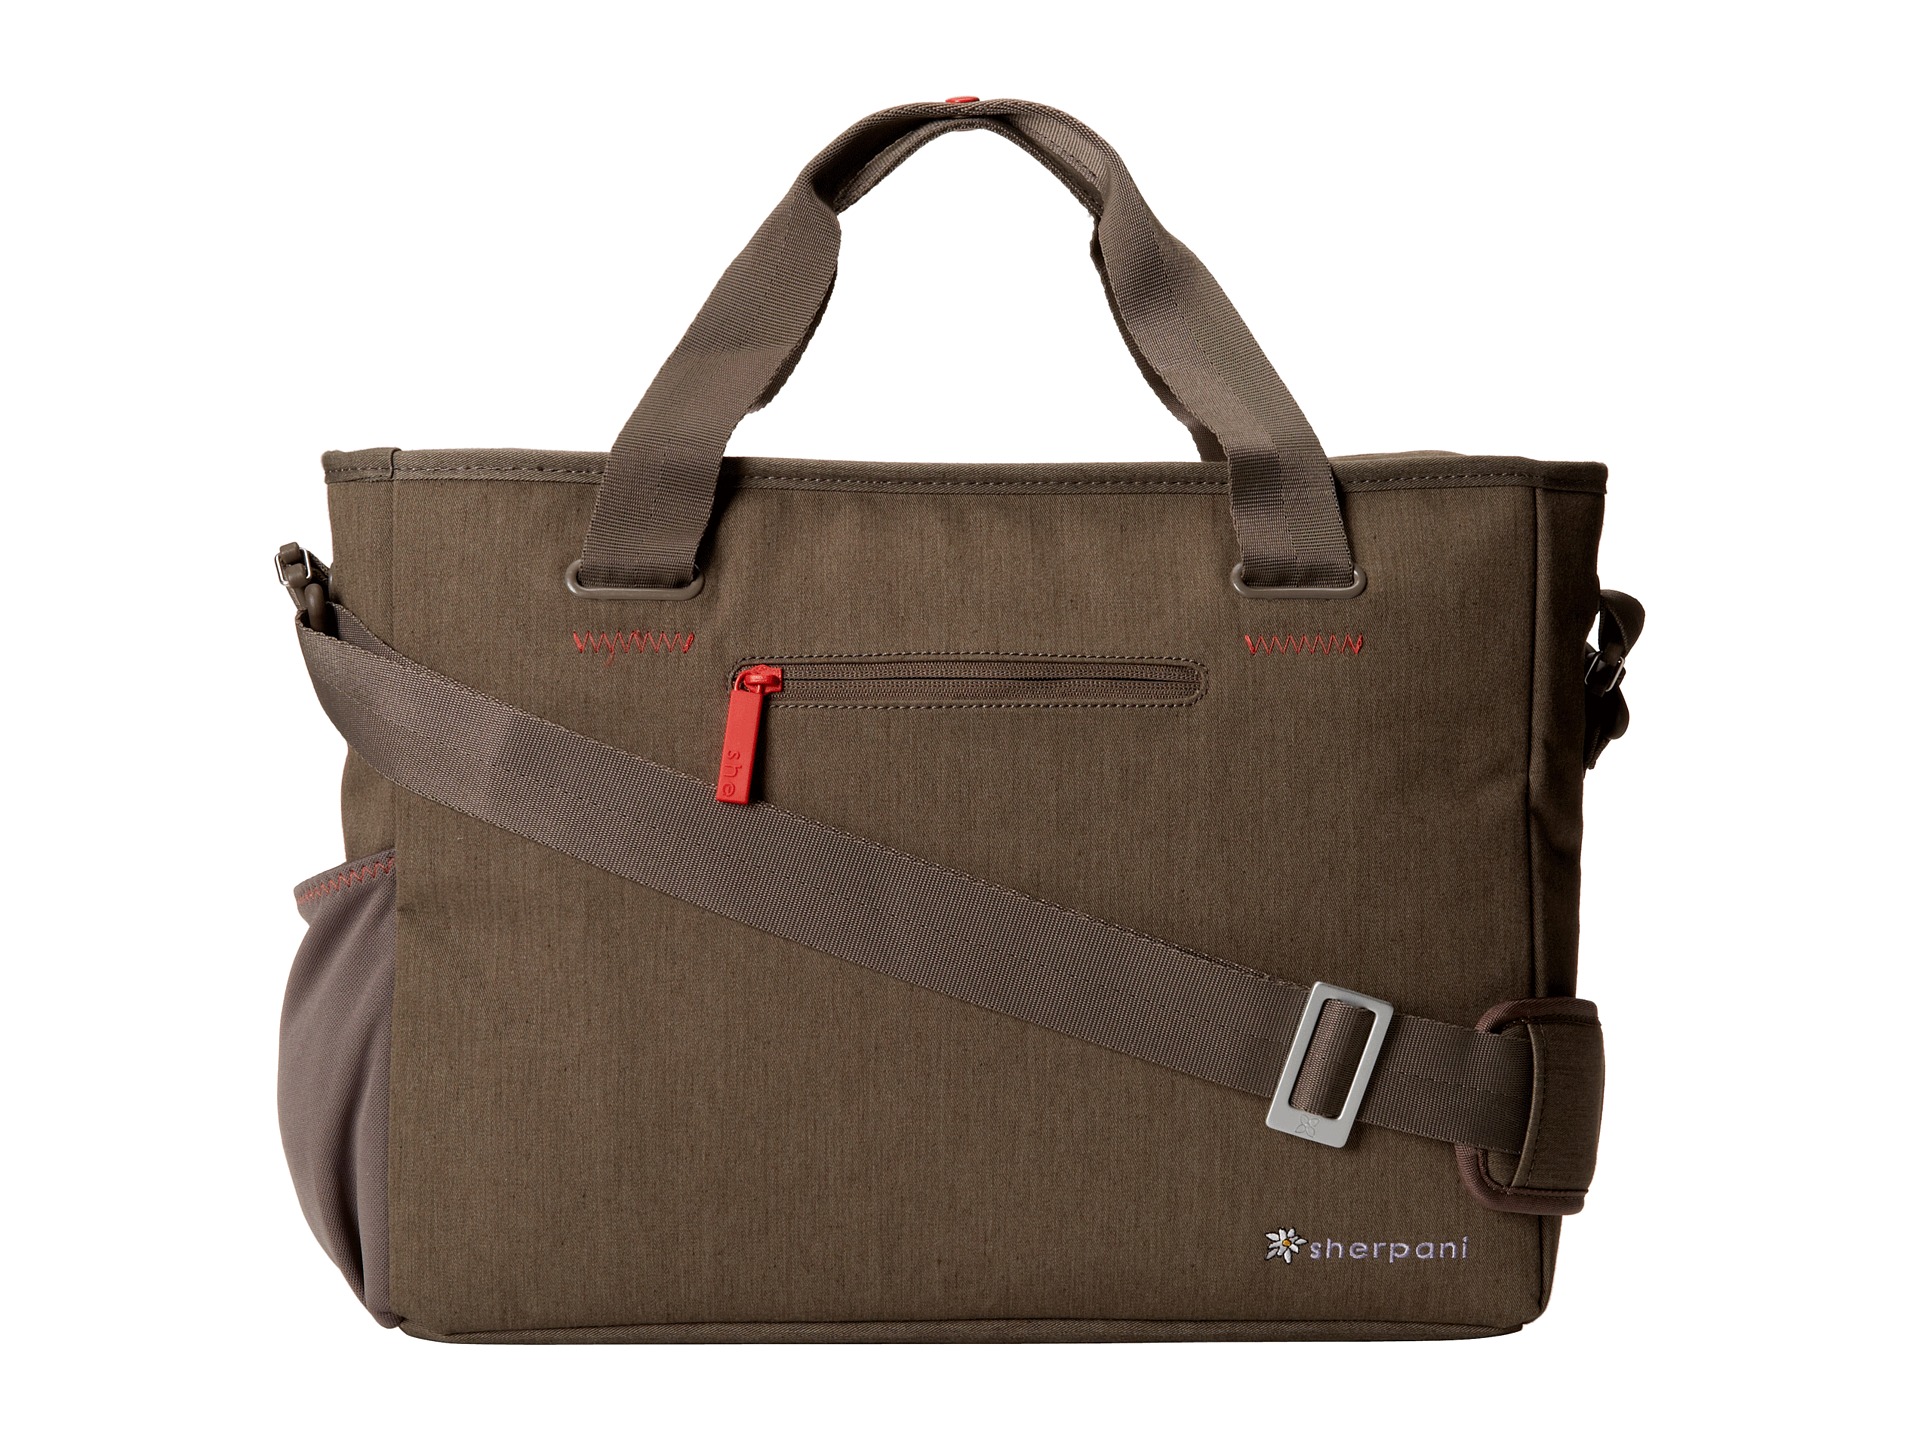 Sherpani Priya Professional Laptop Tote Bag | Shipped Free at Zappos